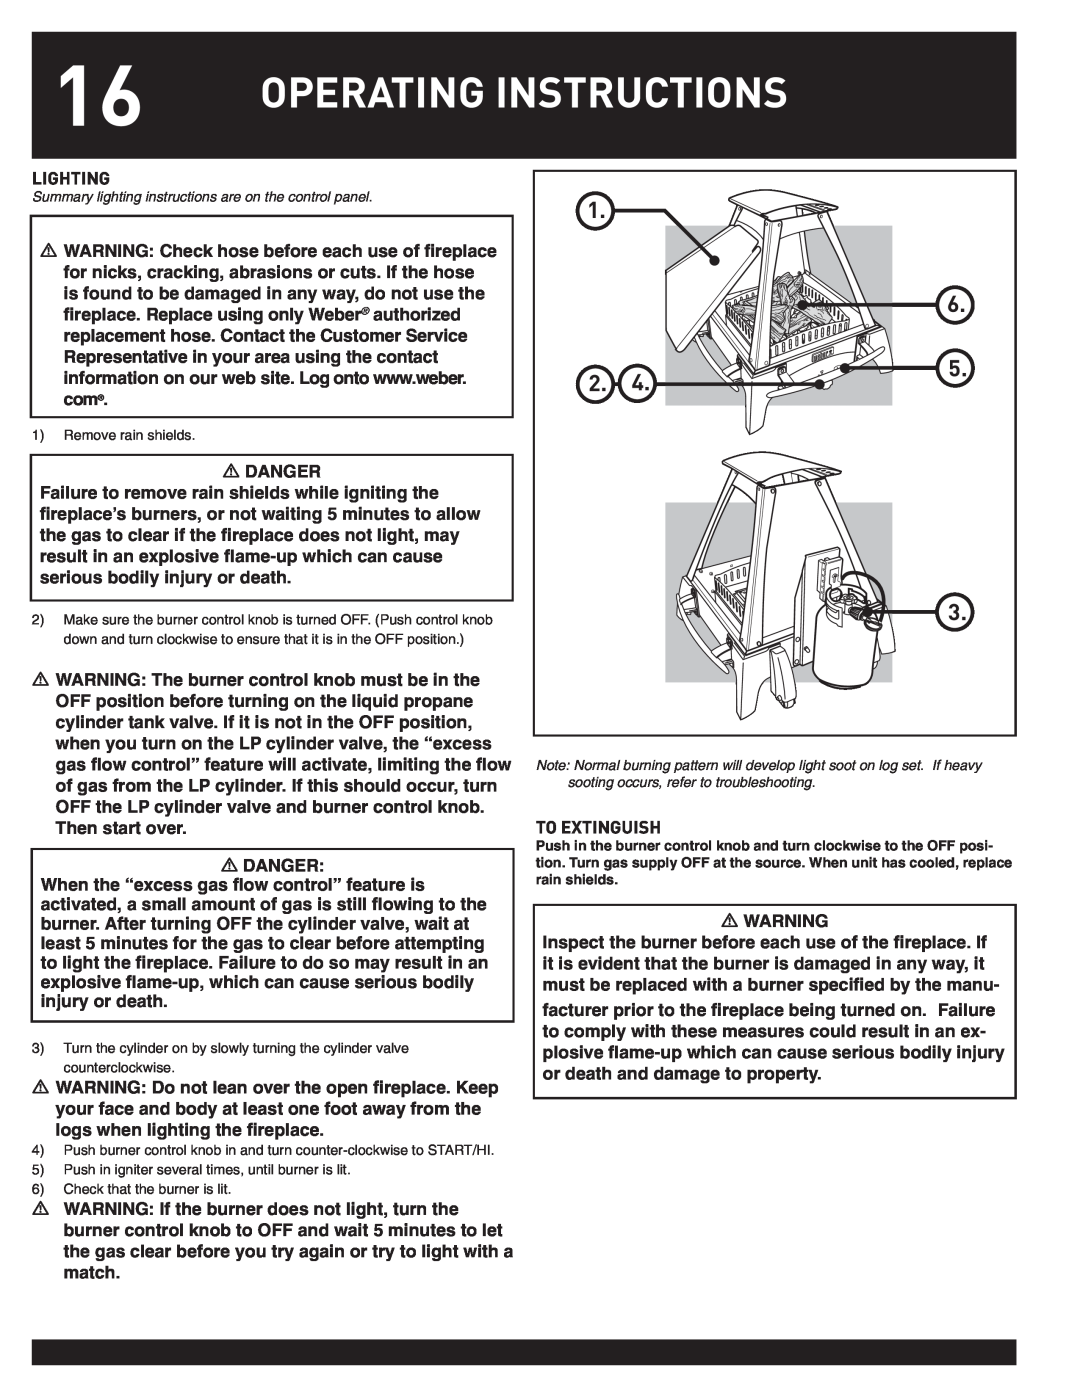 Weber #43028 manual Operating Instructions 